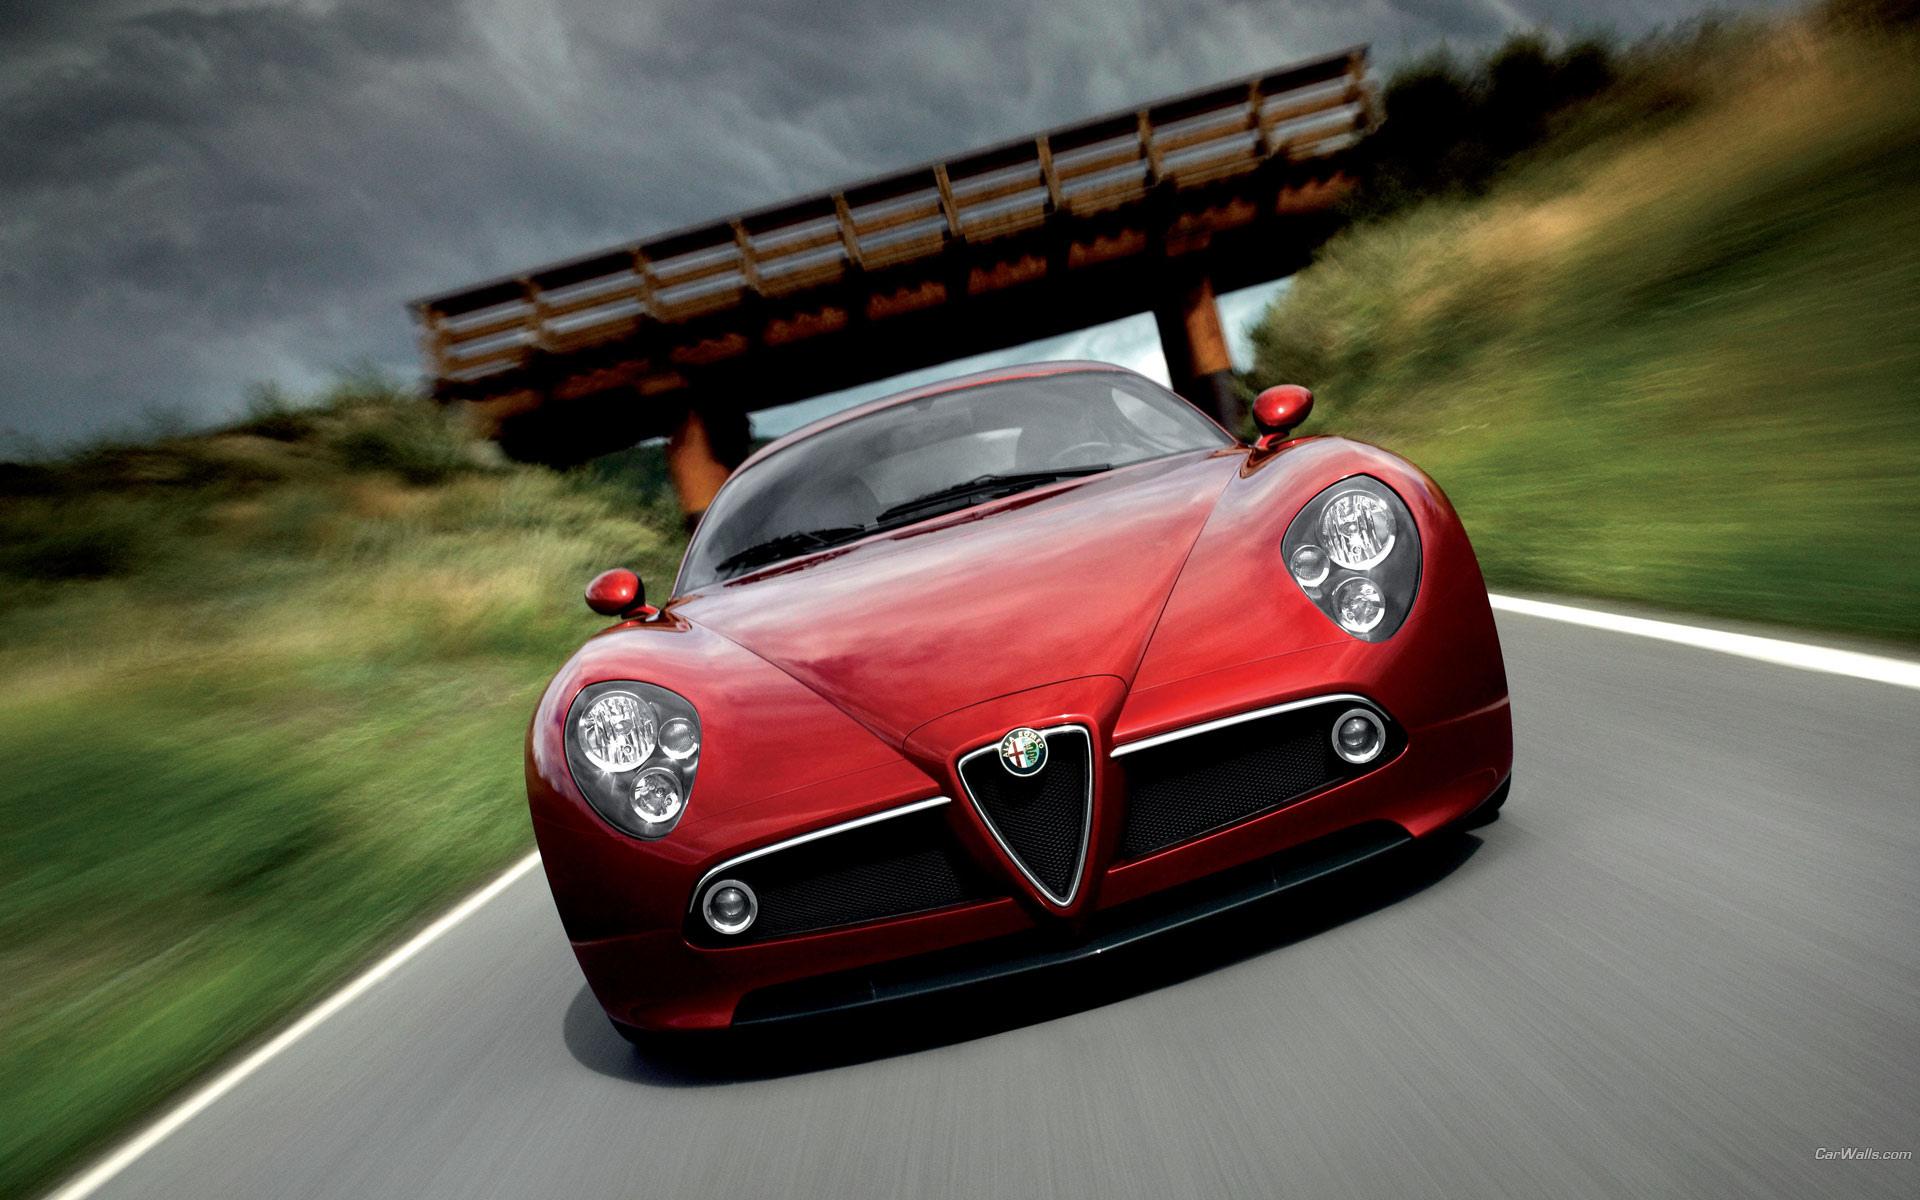 Alfa Romeo 8C Competizione at 1024 x 1024 iPad size wallpapers HD quality